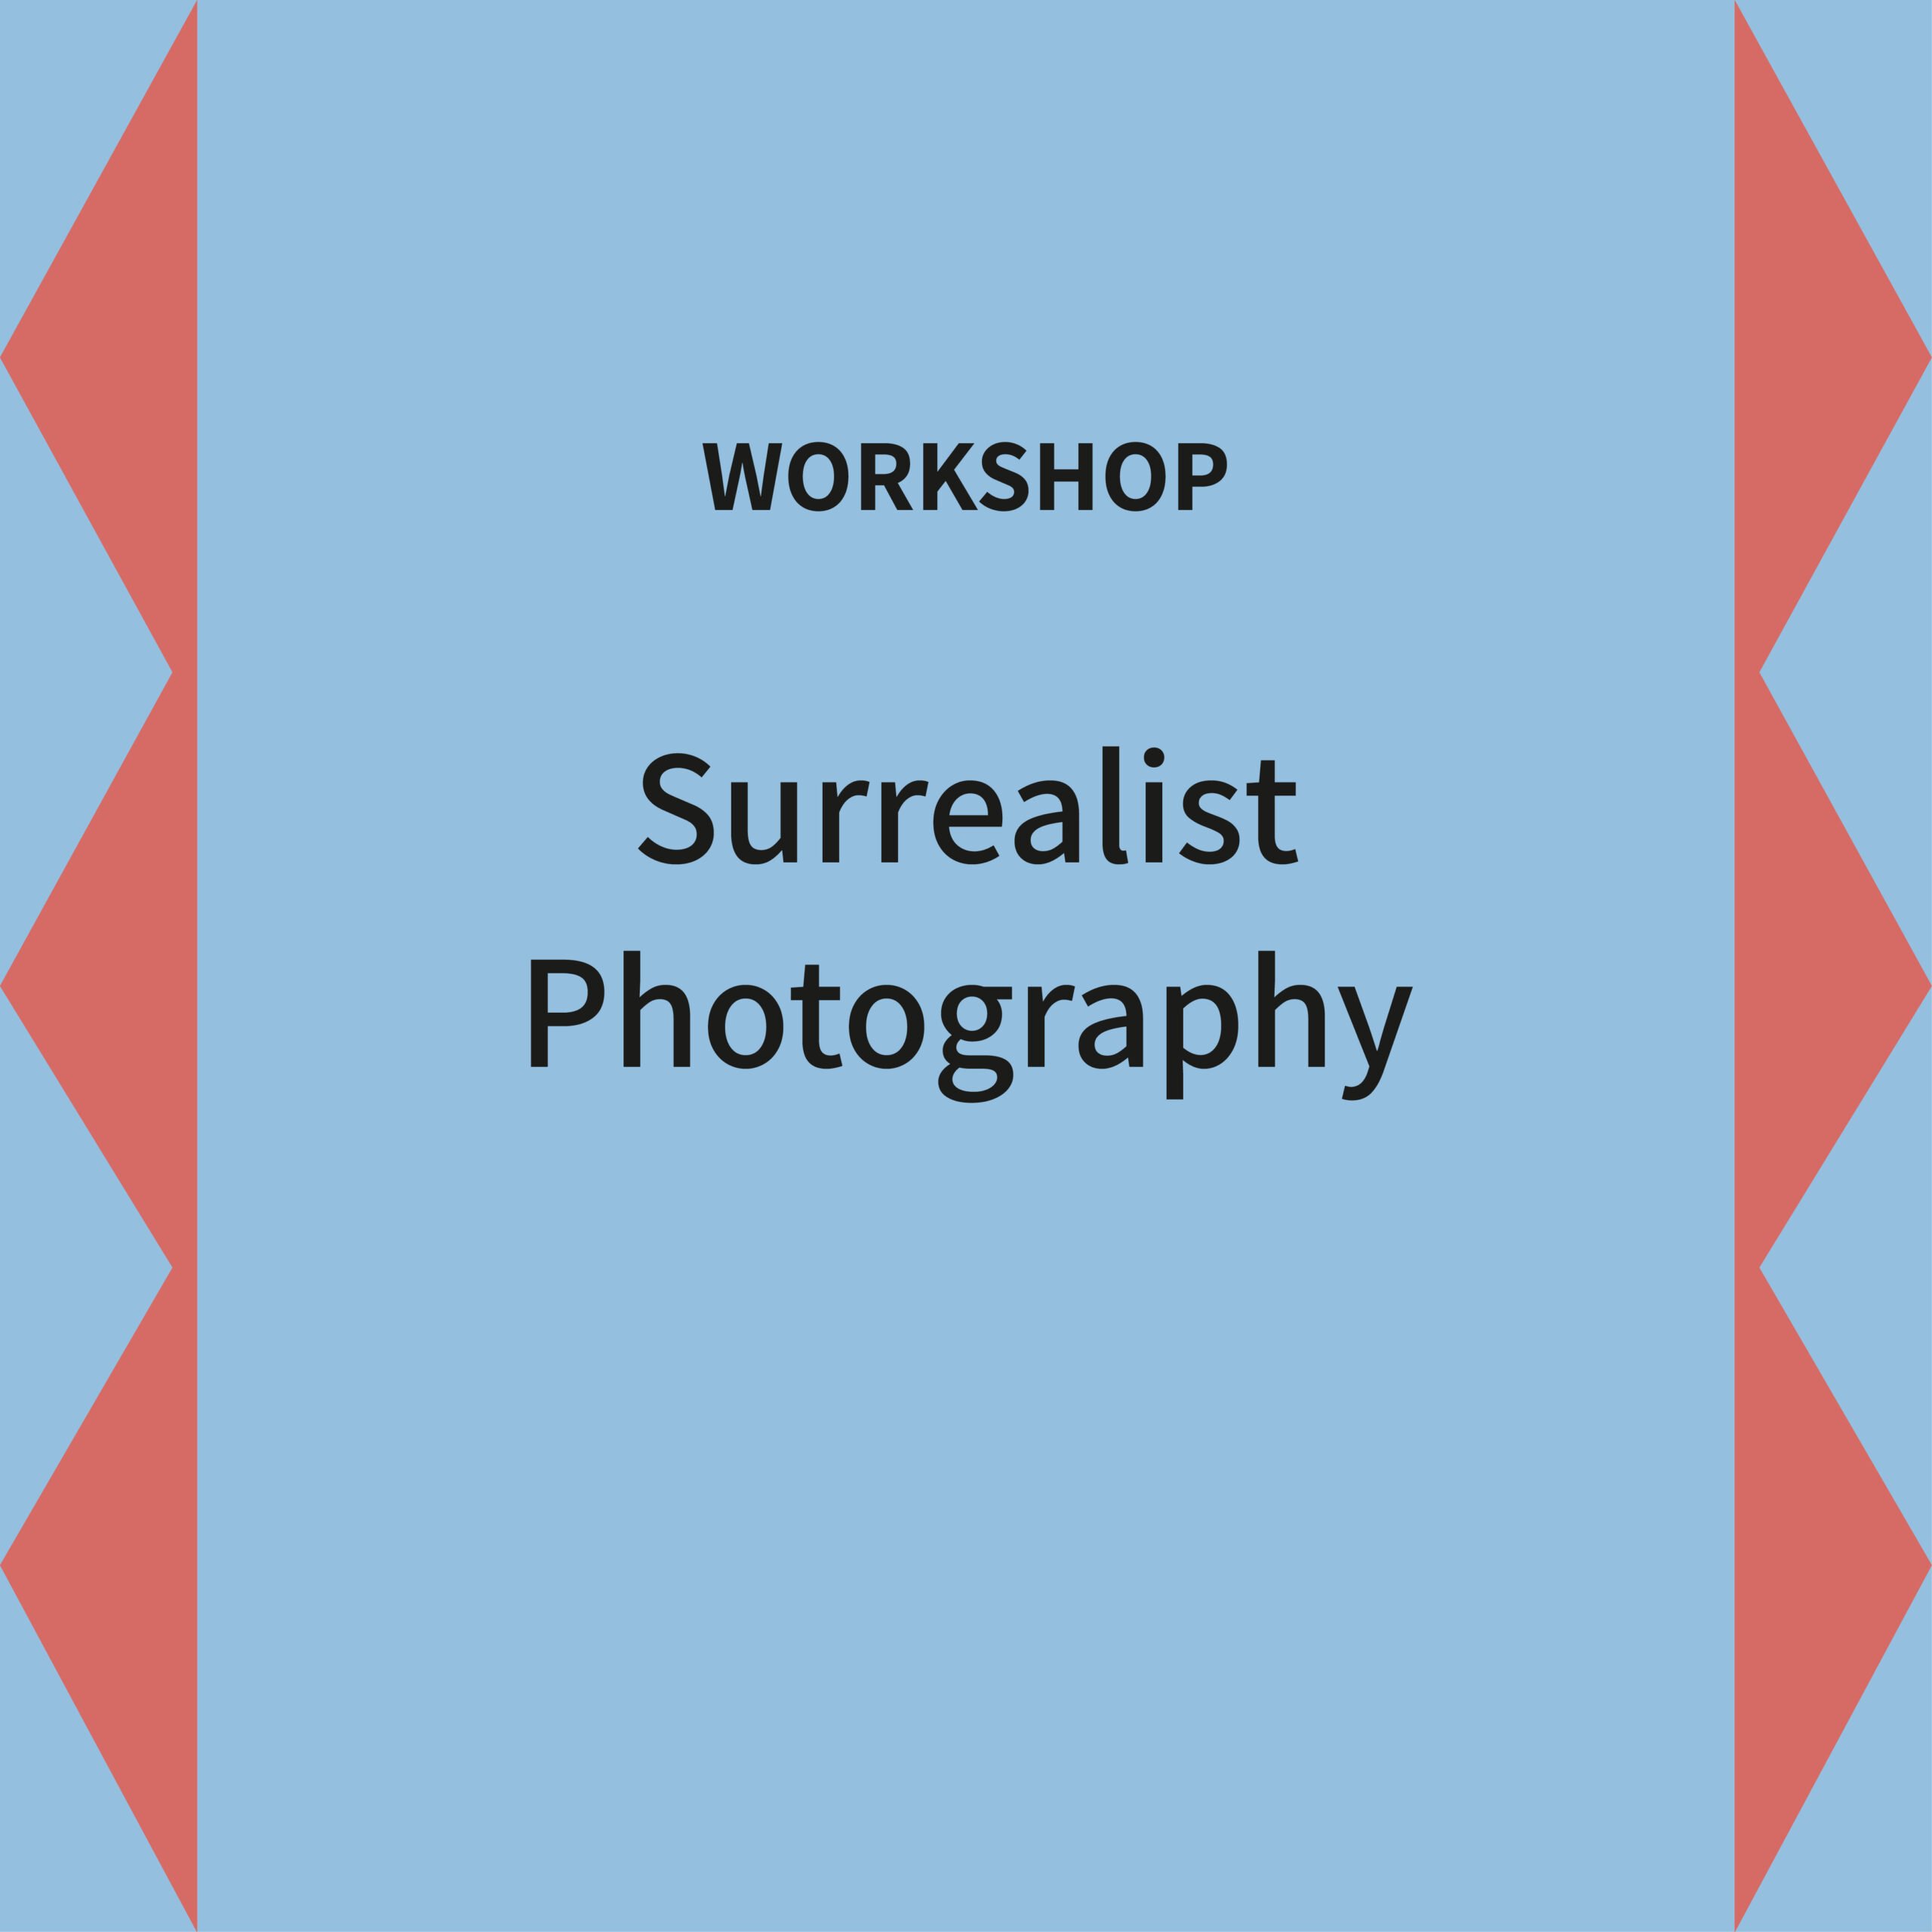 Surrealist Photography workshop